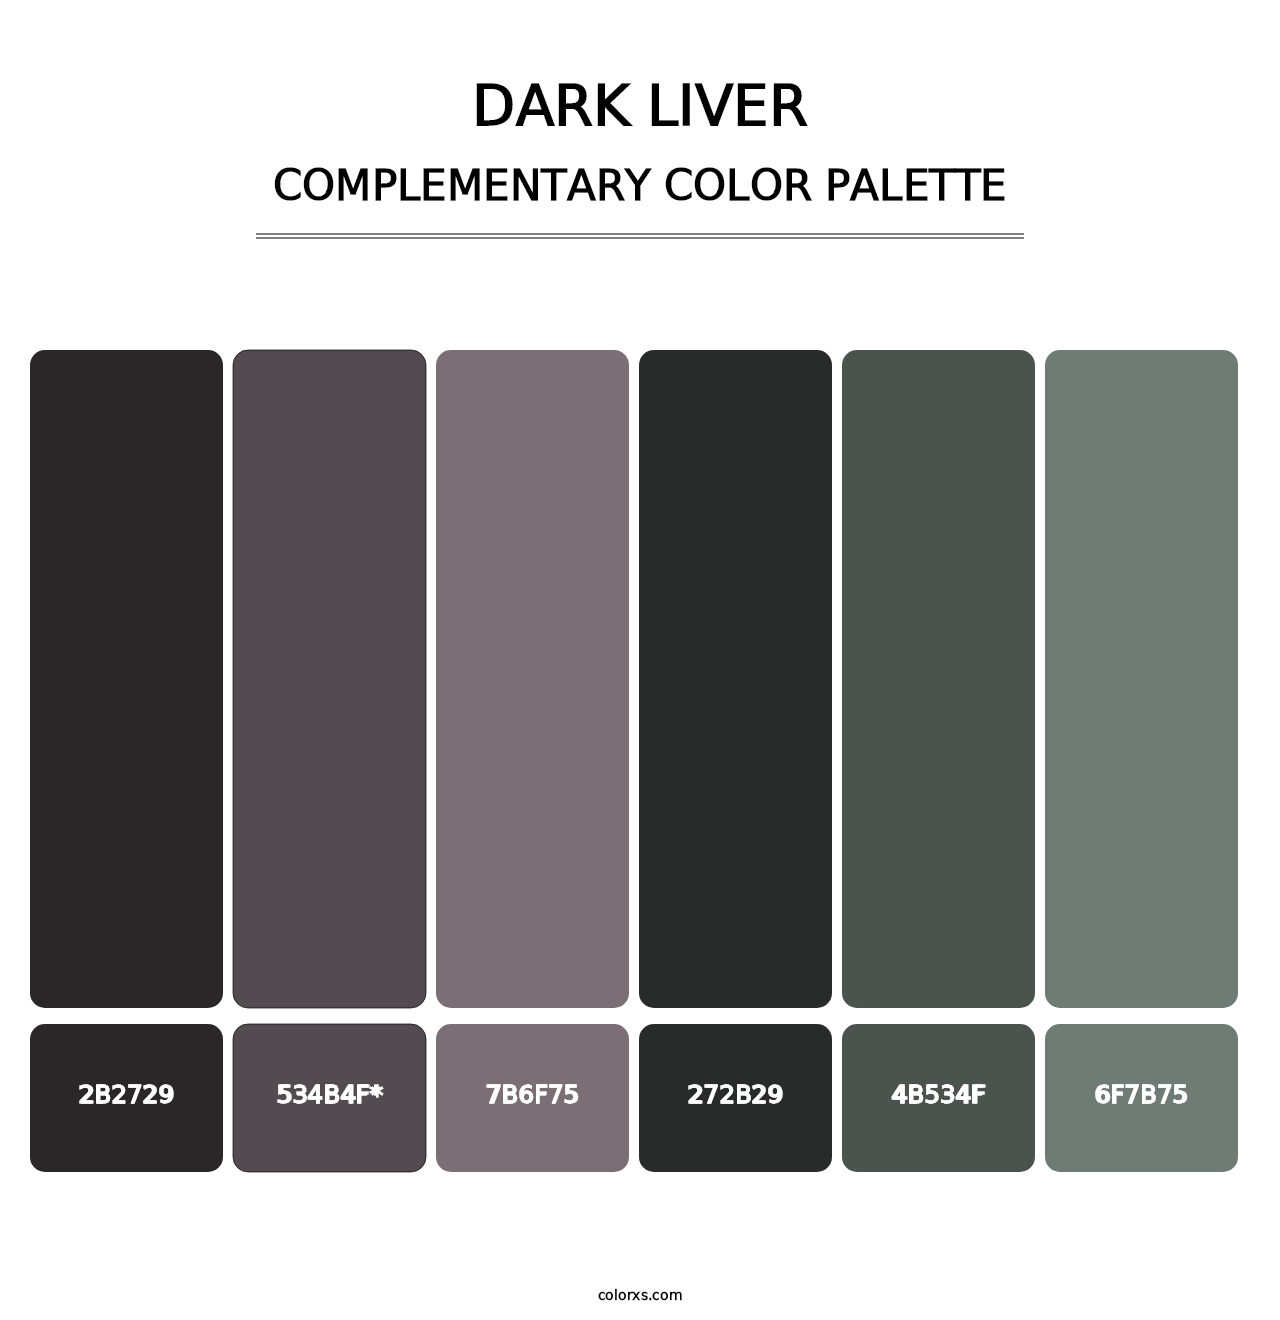 Dark Liver - Complementary Color Palette